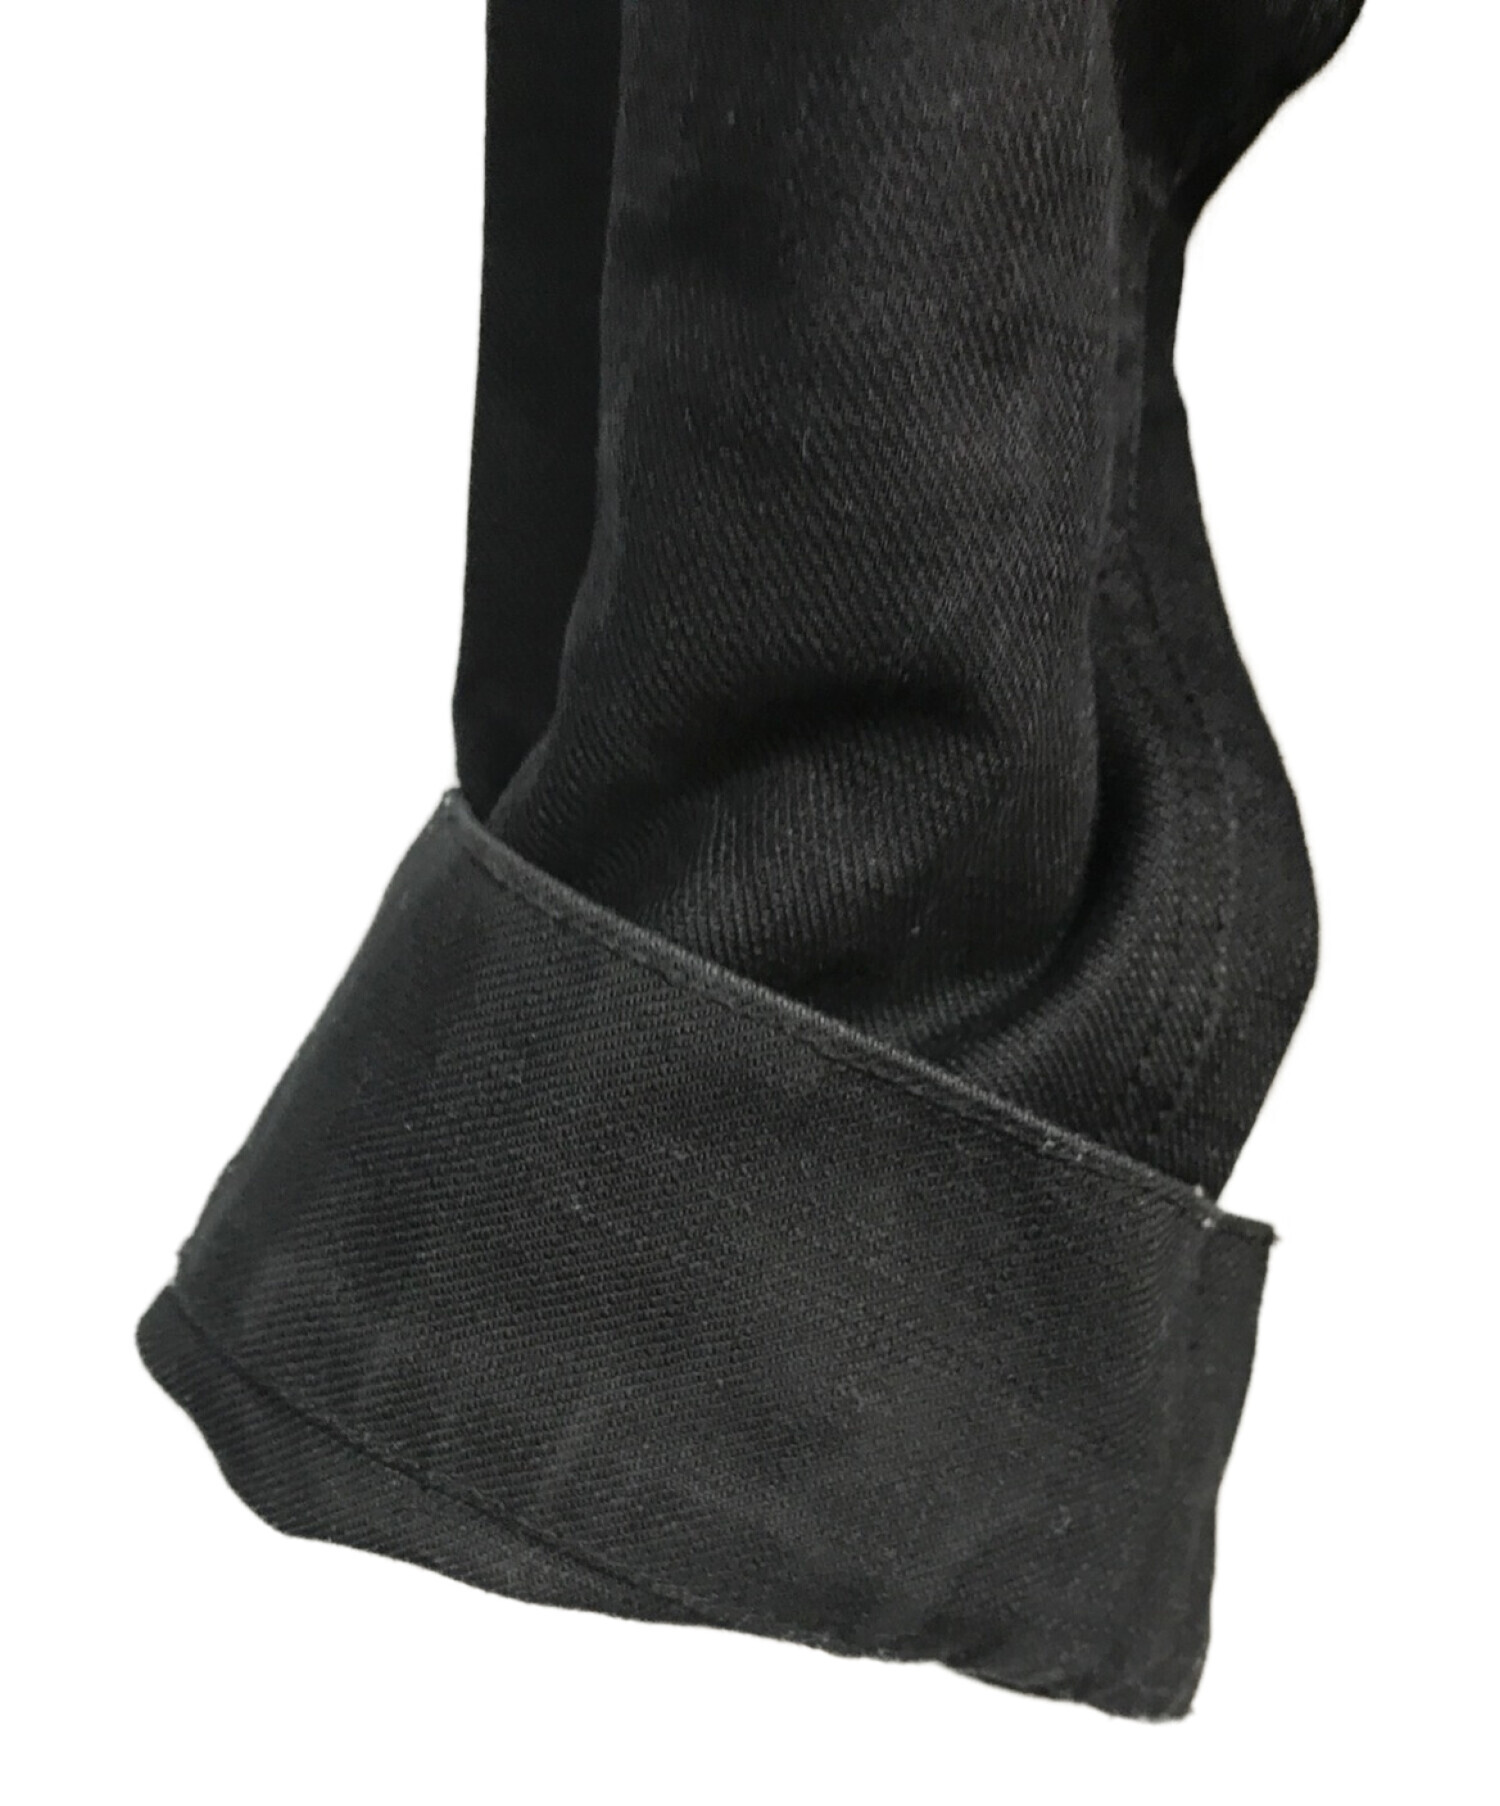 BOUNTY HUNTER (バウンティハンター) スカル刺繍バックロゴデニムジャケット ブラック サイズ:XL